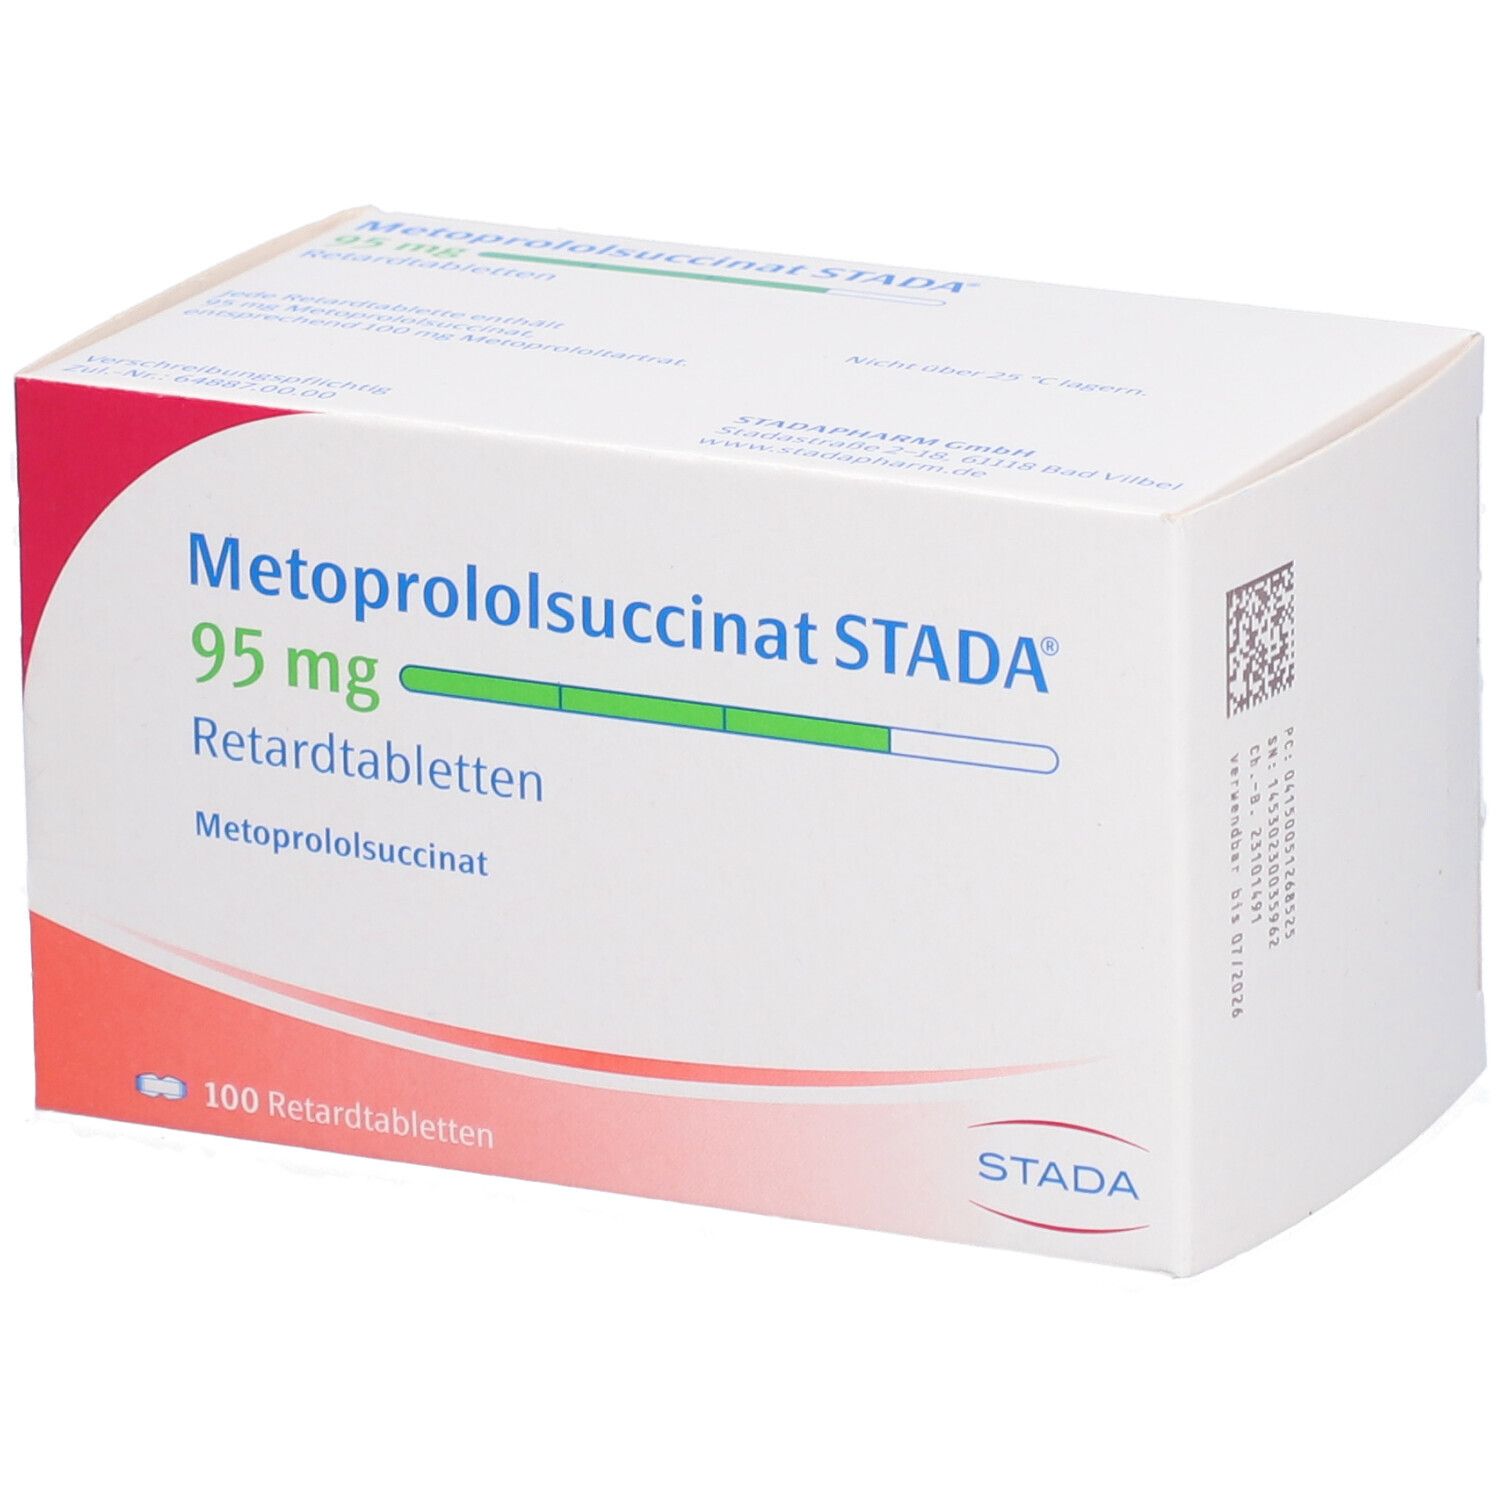 Metoprololsuccinat STADA® 95 mg